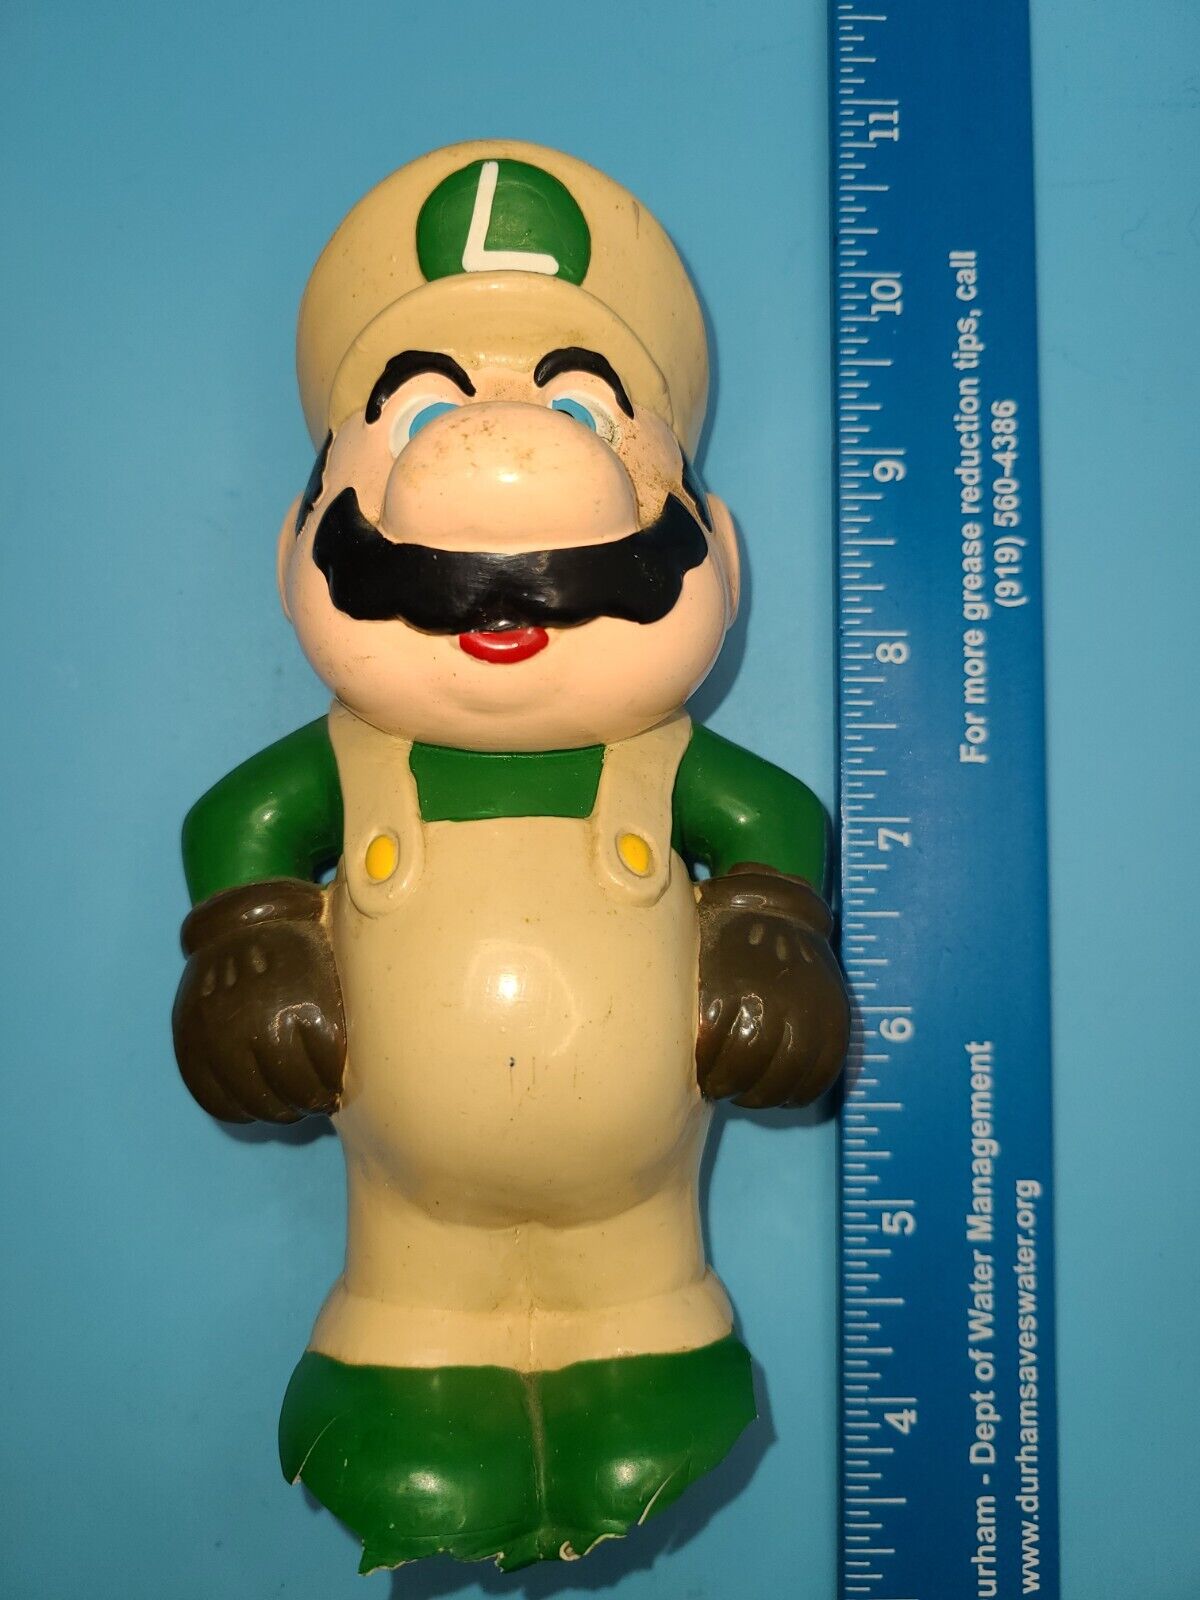 Vintage 1988 Luigi Mario Bros Nintendo of America Coin Bank (Damaged)